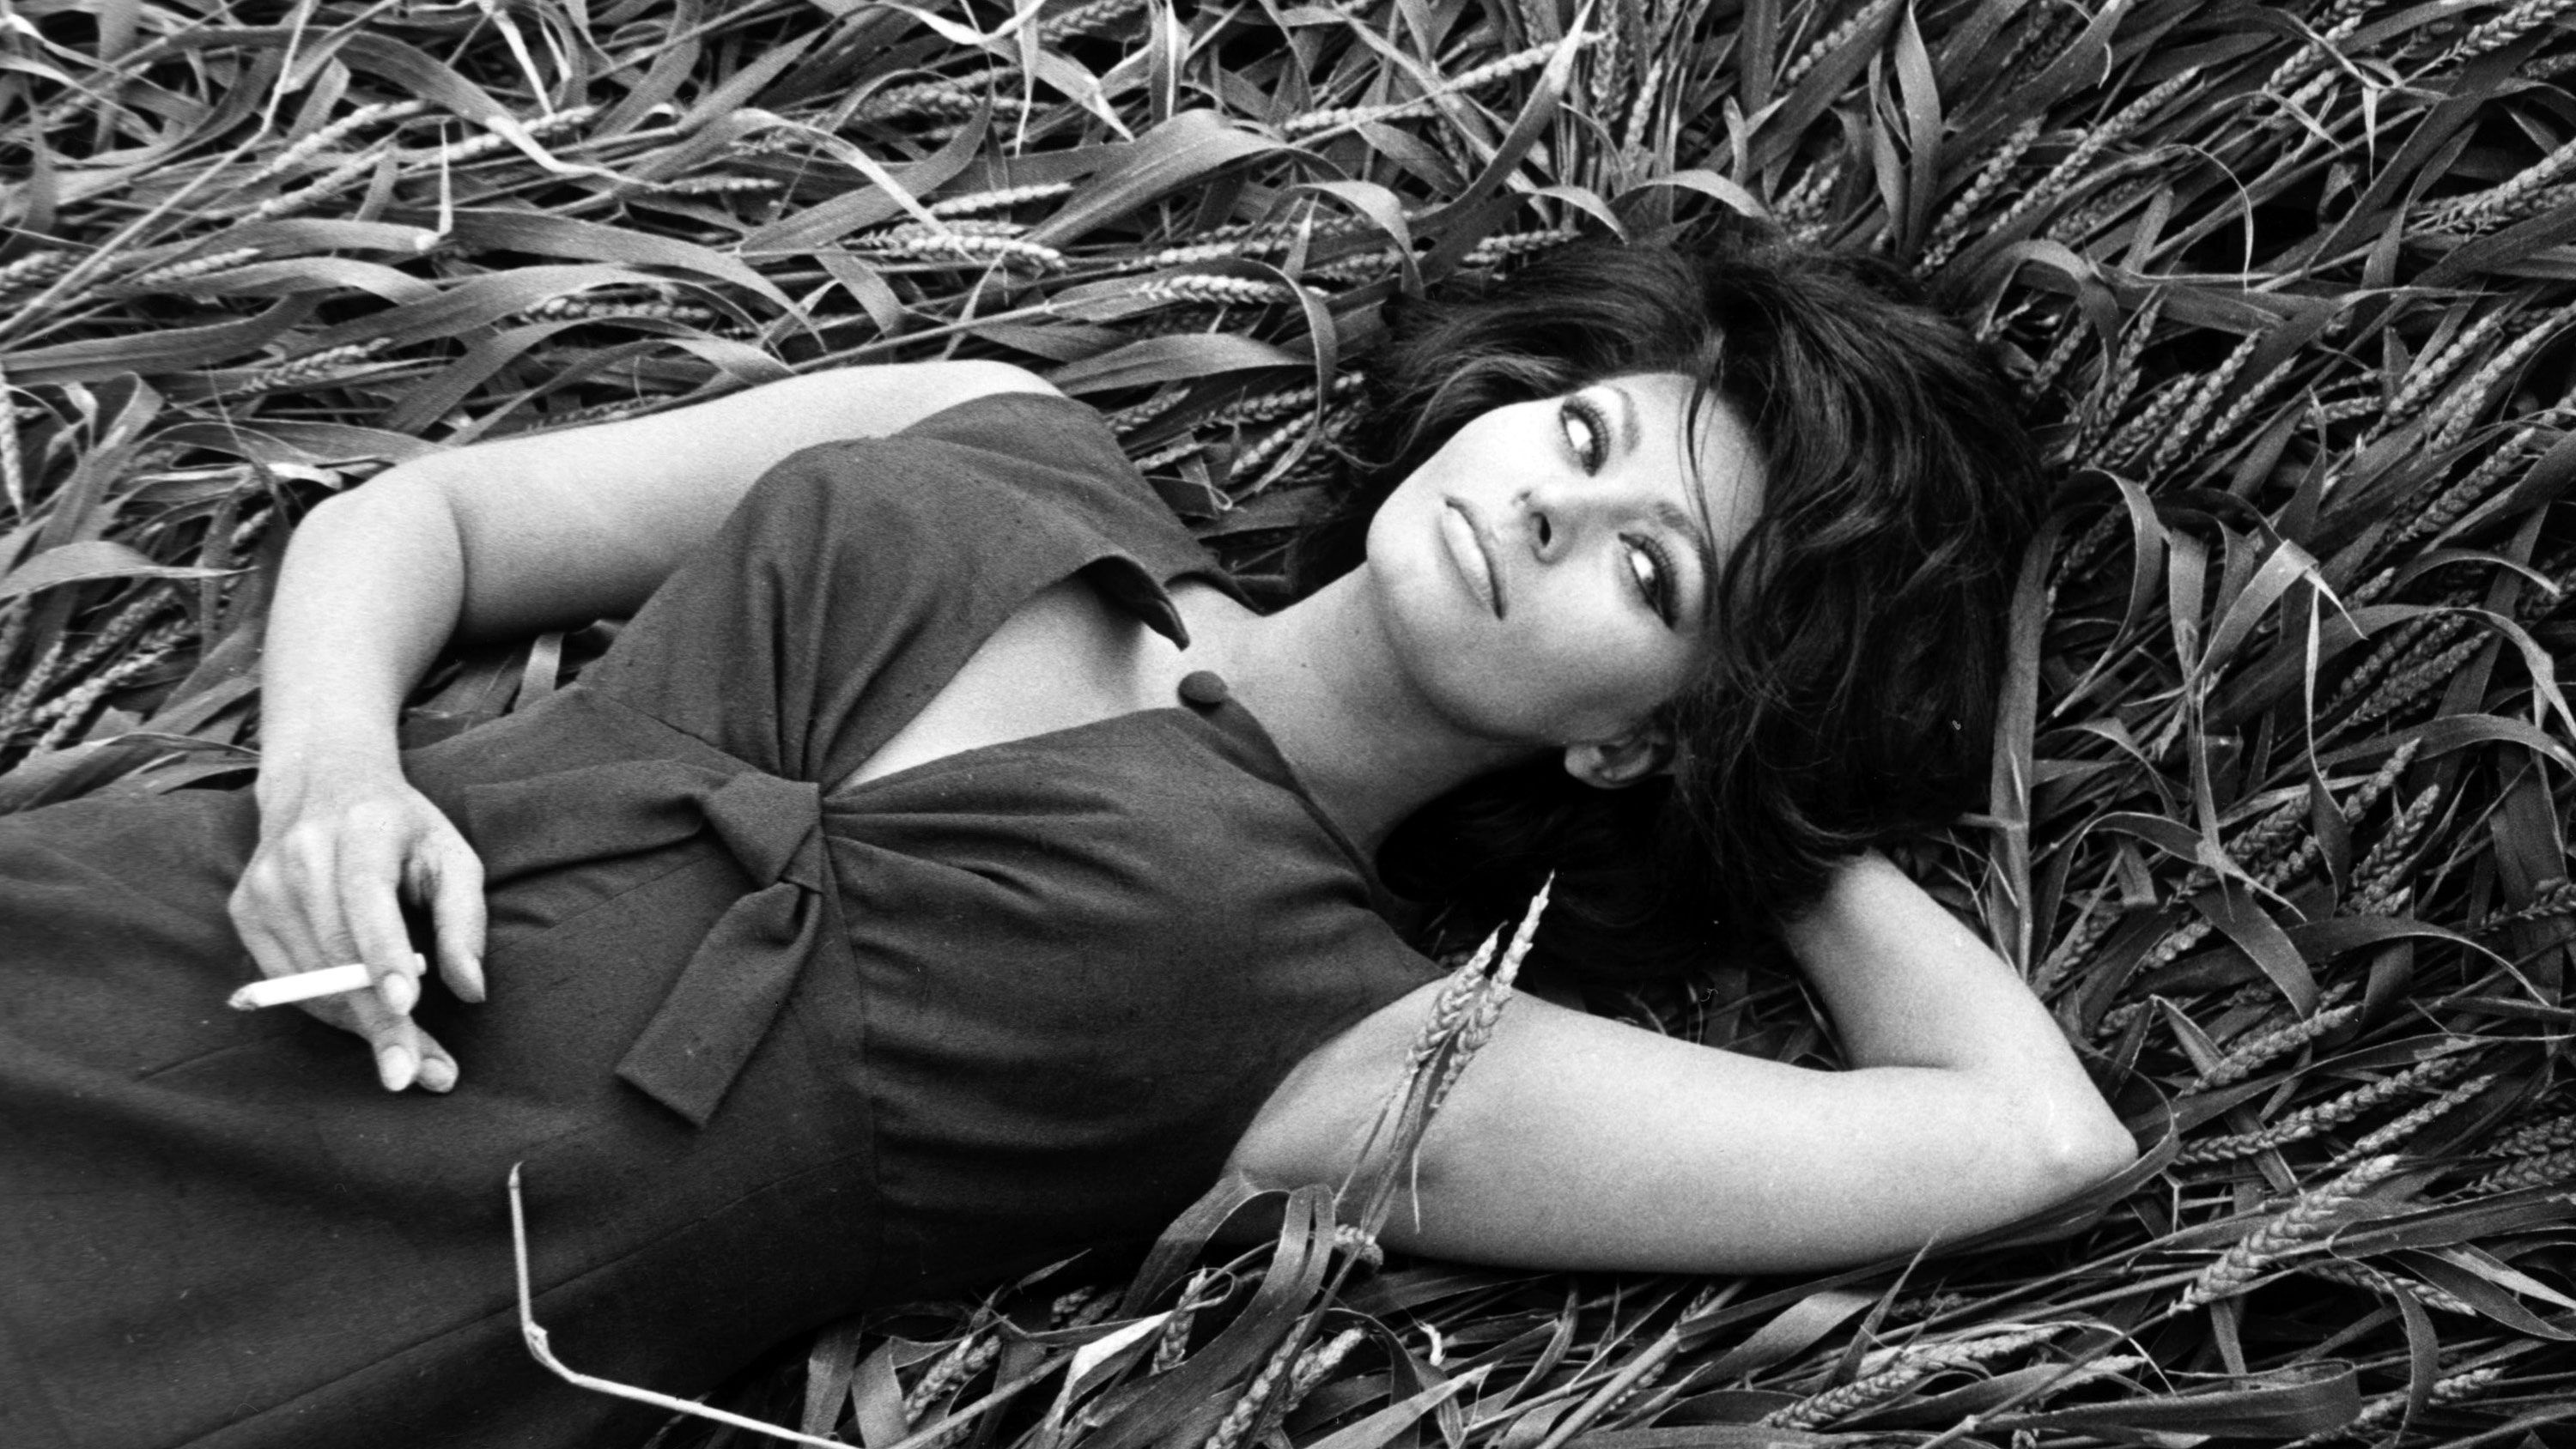 Sophia Loren movies, Top wallpapers, Stunning backgrounds, Classic beauty, 3000x1690 HD Desktop